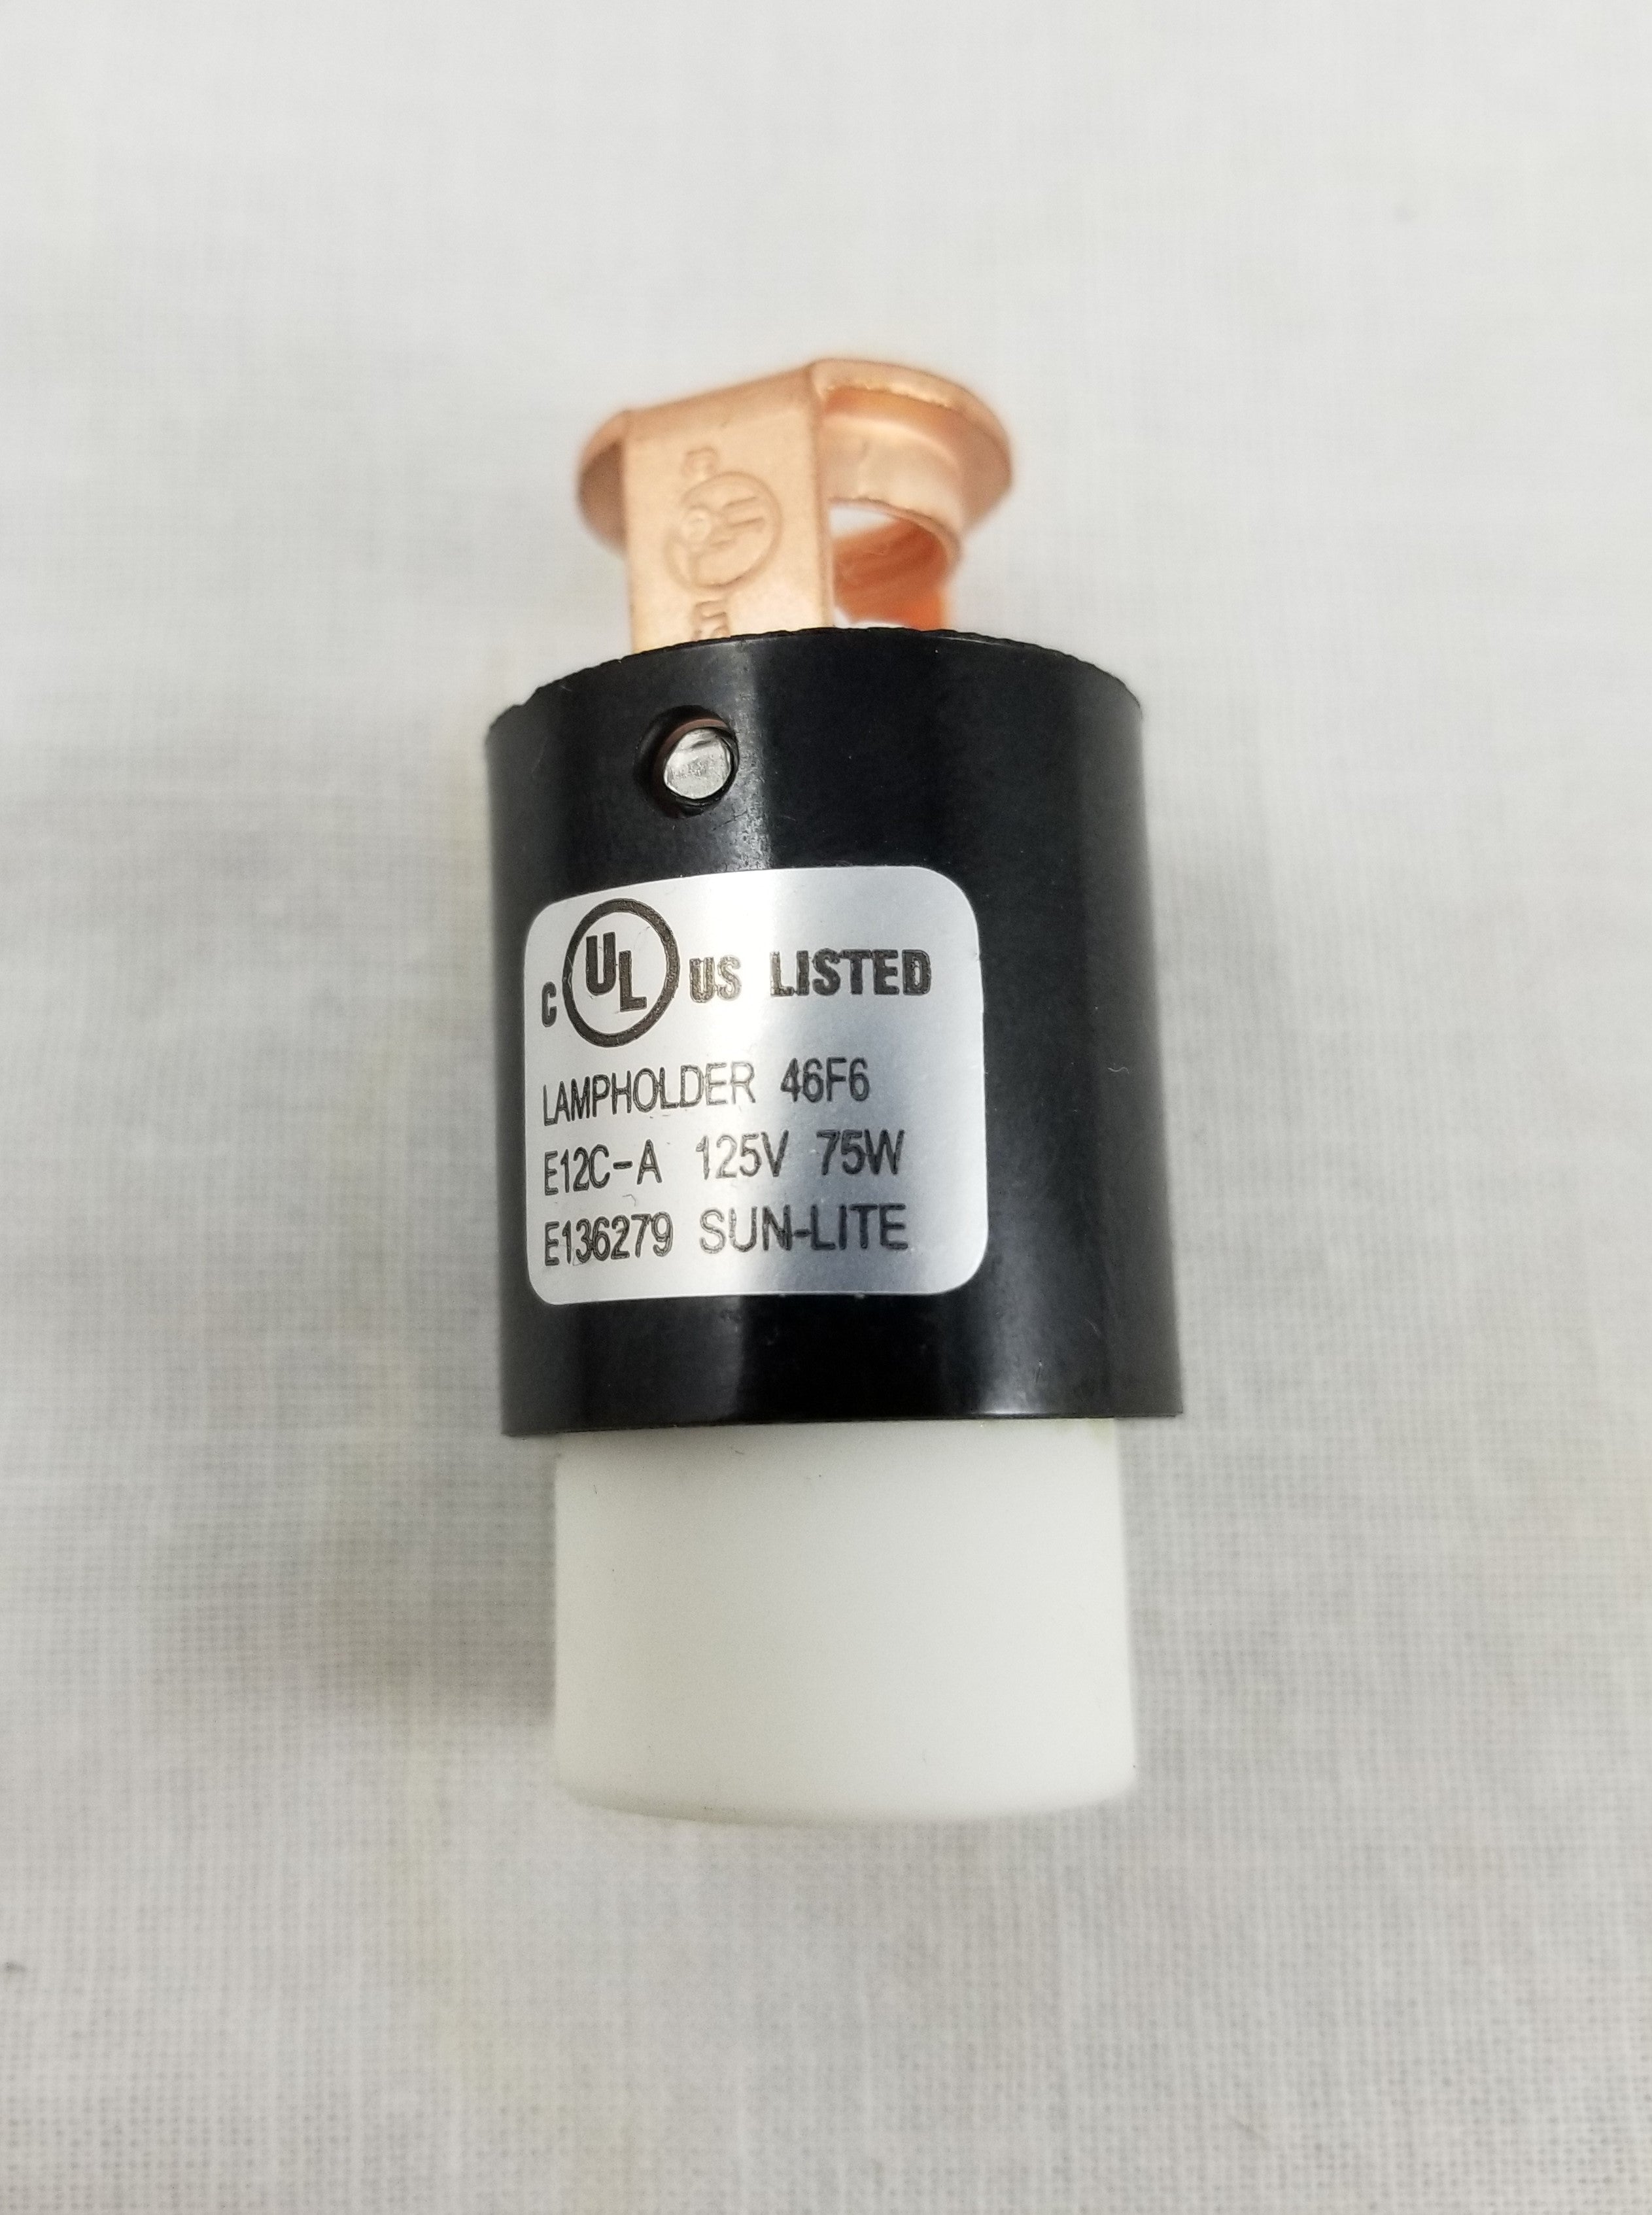 UL Listed Sun-Lite Socket - 125V 75W